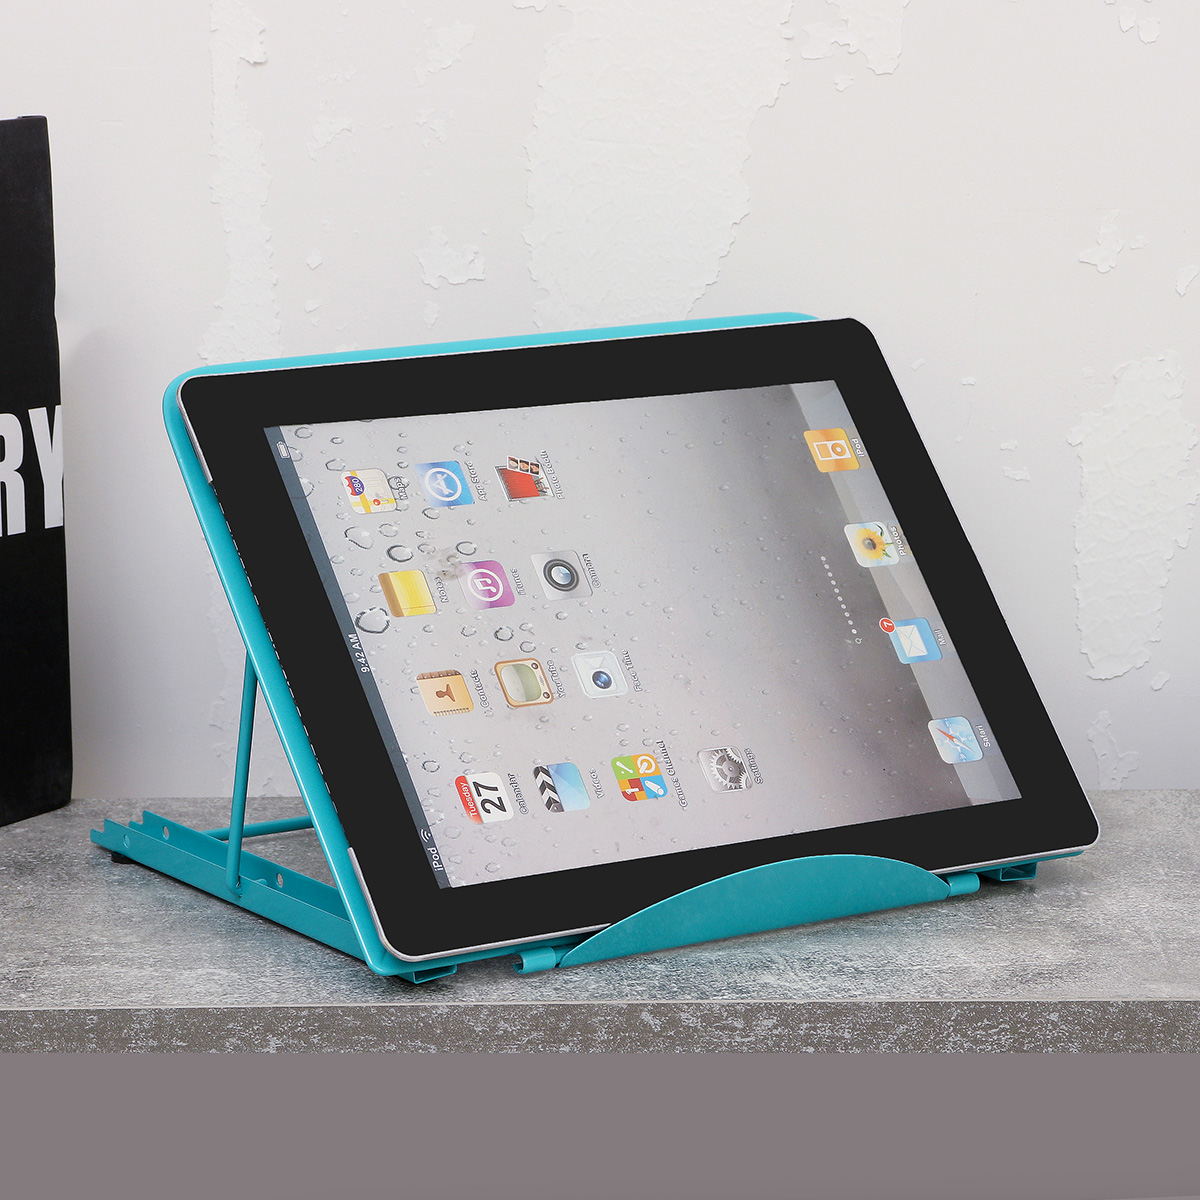 Portable-Adjustable-Angle-Heat-Dissipation-Mesh-Telecommuting-Online-Learning-Desktop-Tablet-Laptop--1673670-22